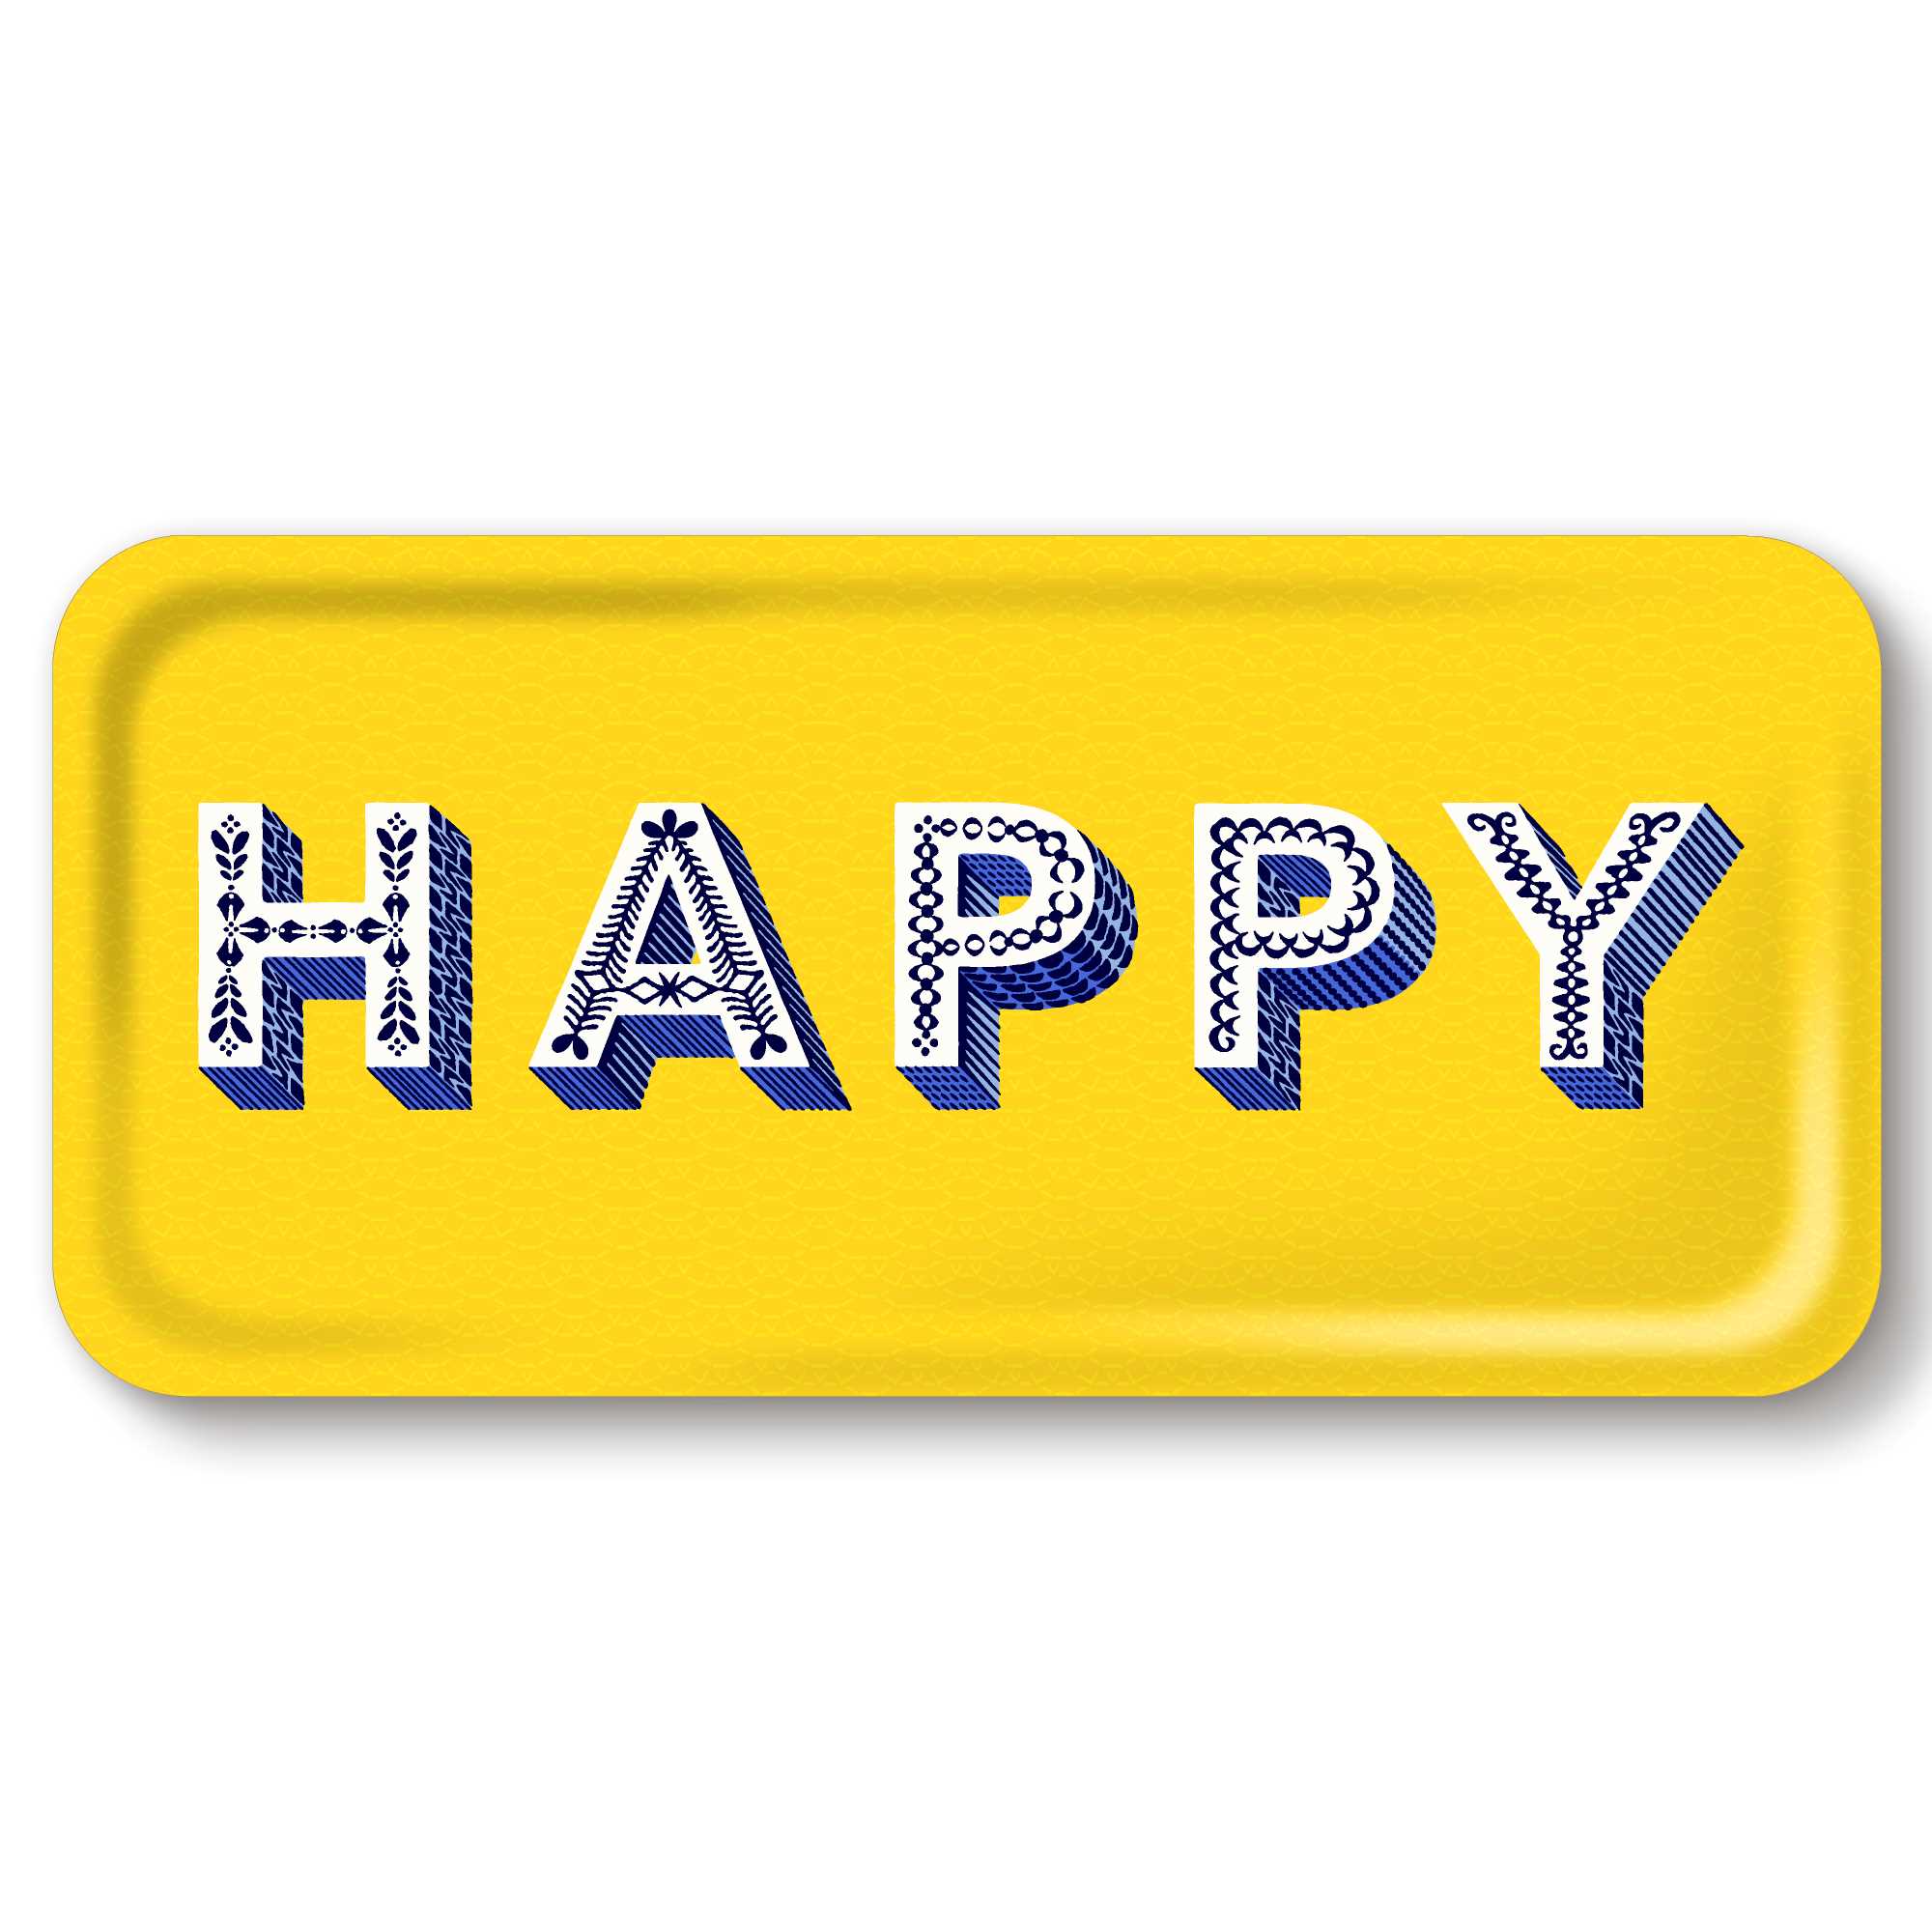 Tablett 32x15cm HAPPY yellow